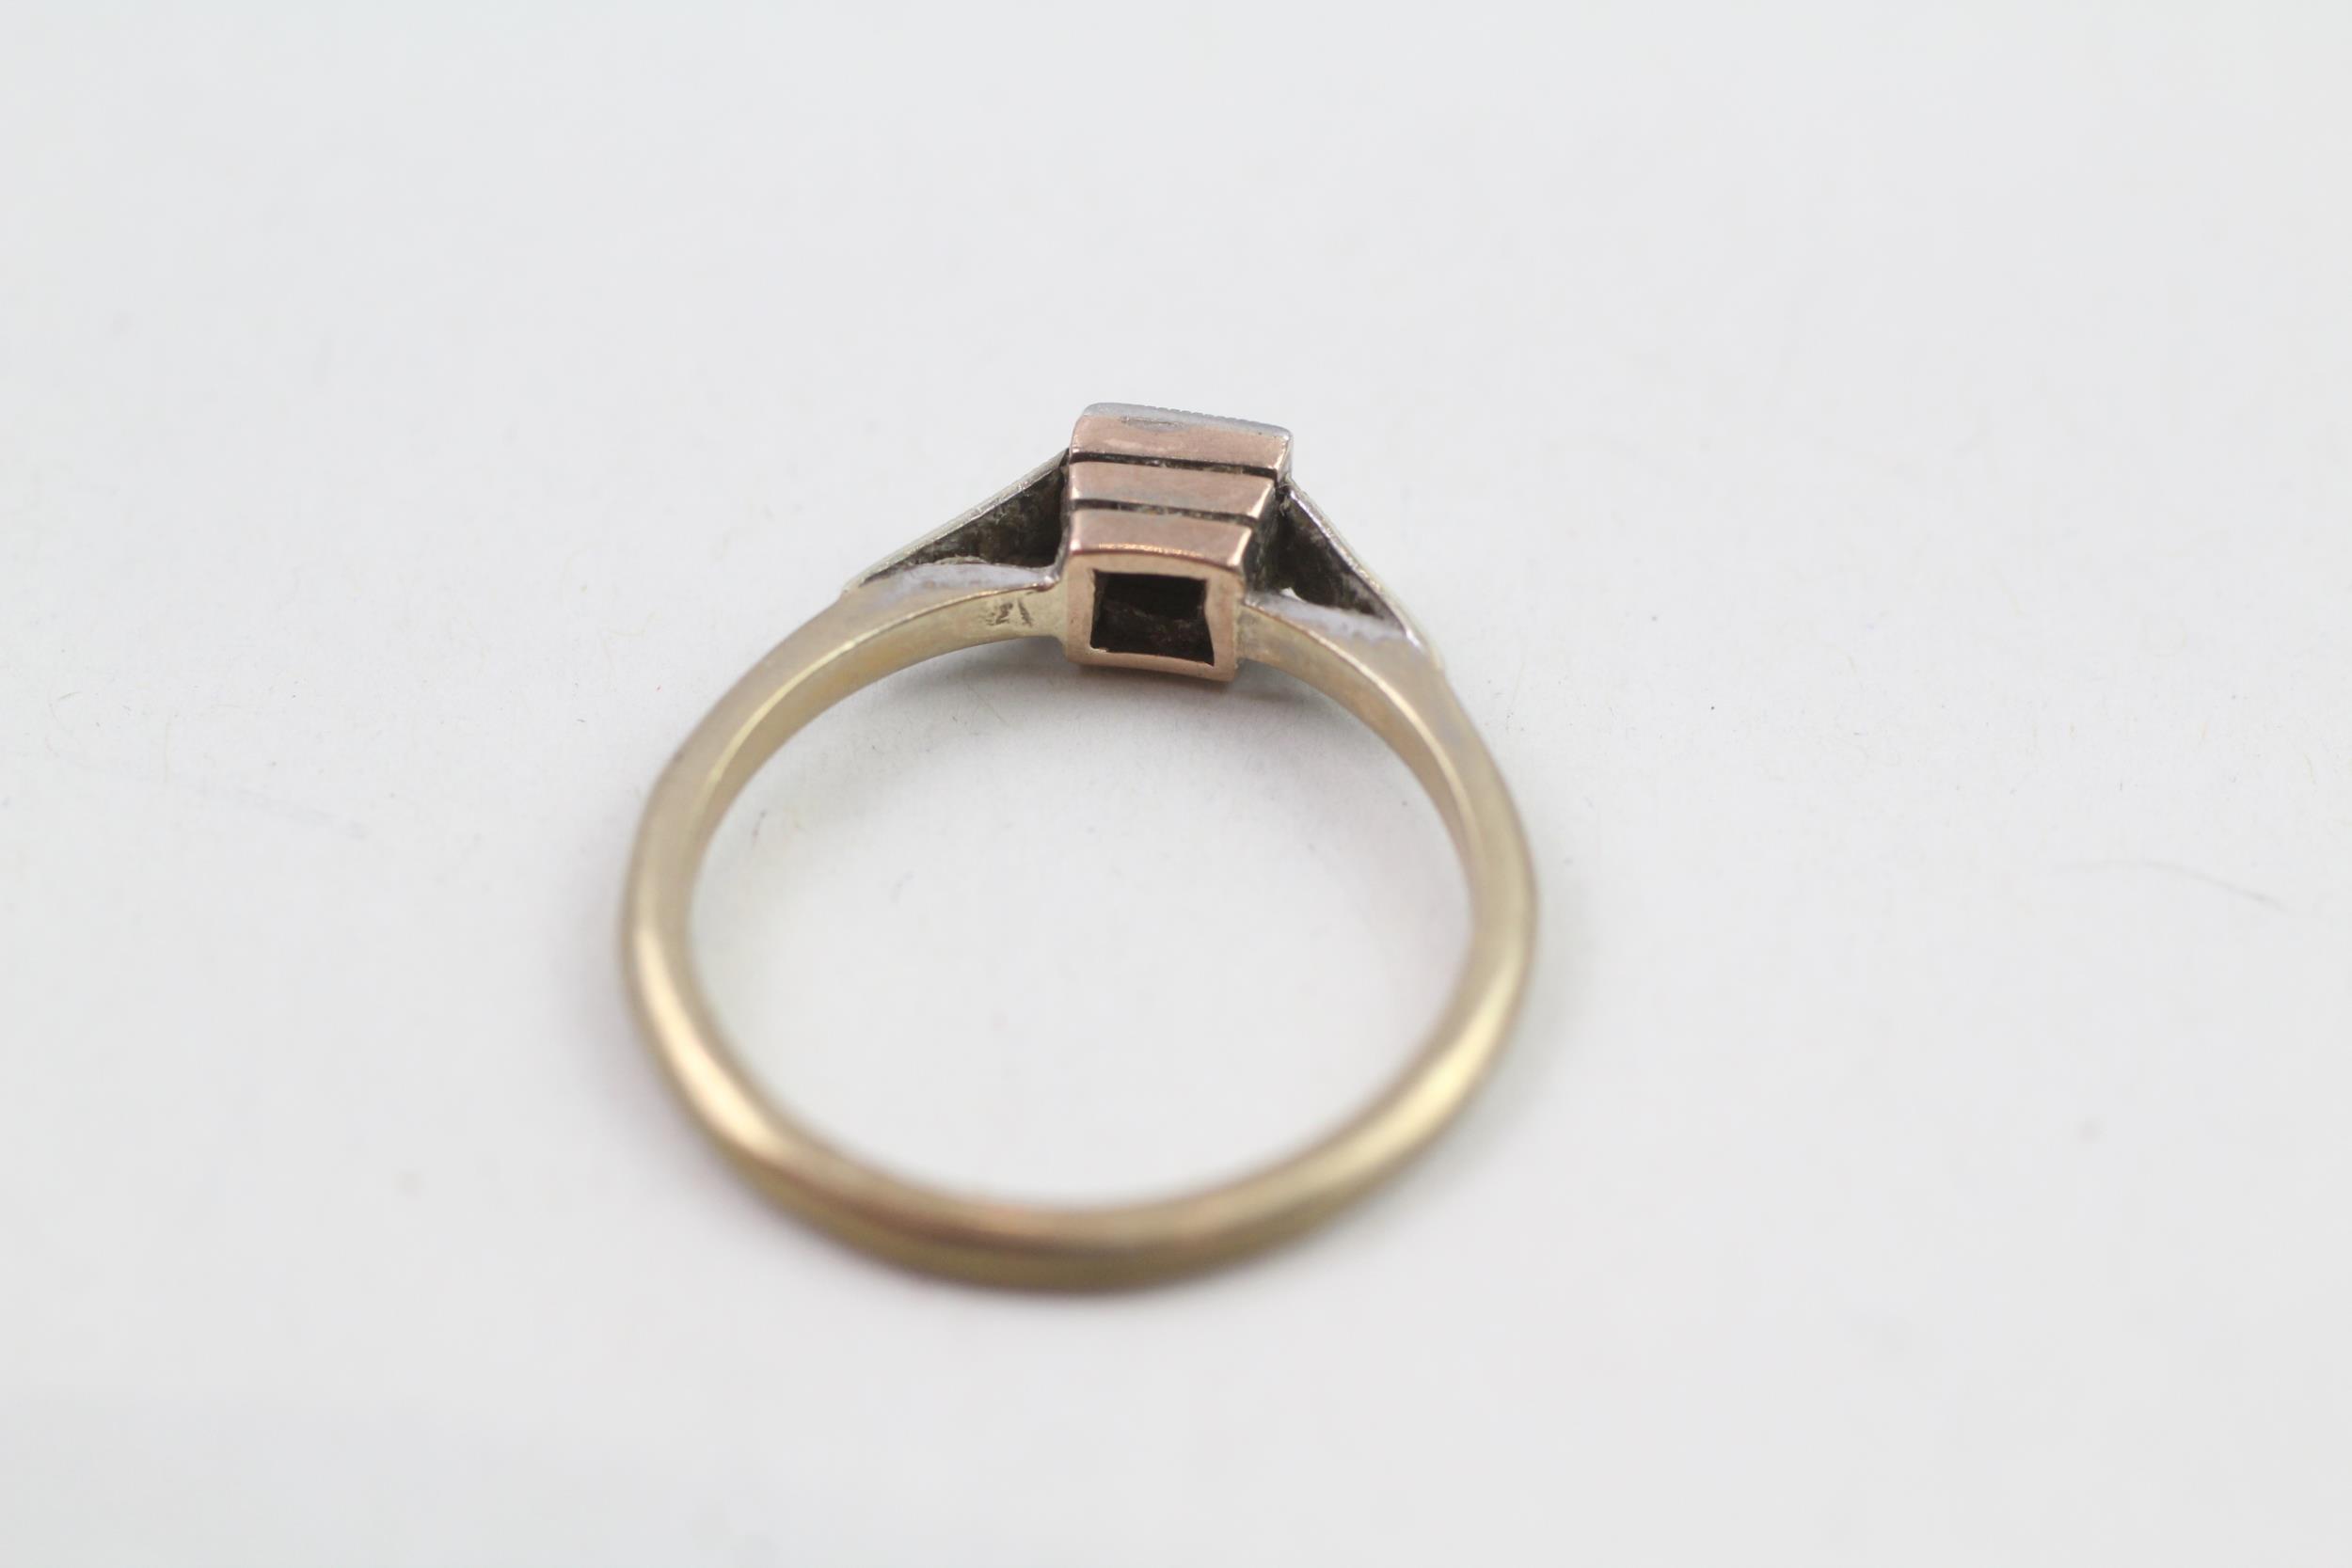 9ct gold & platinum old cut diamond single stone ring (2g) Size O - Image 4 of 4